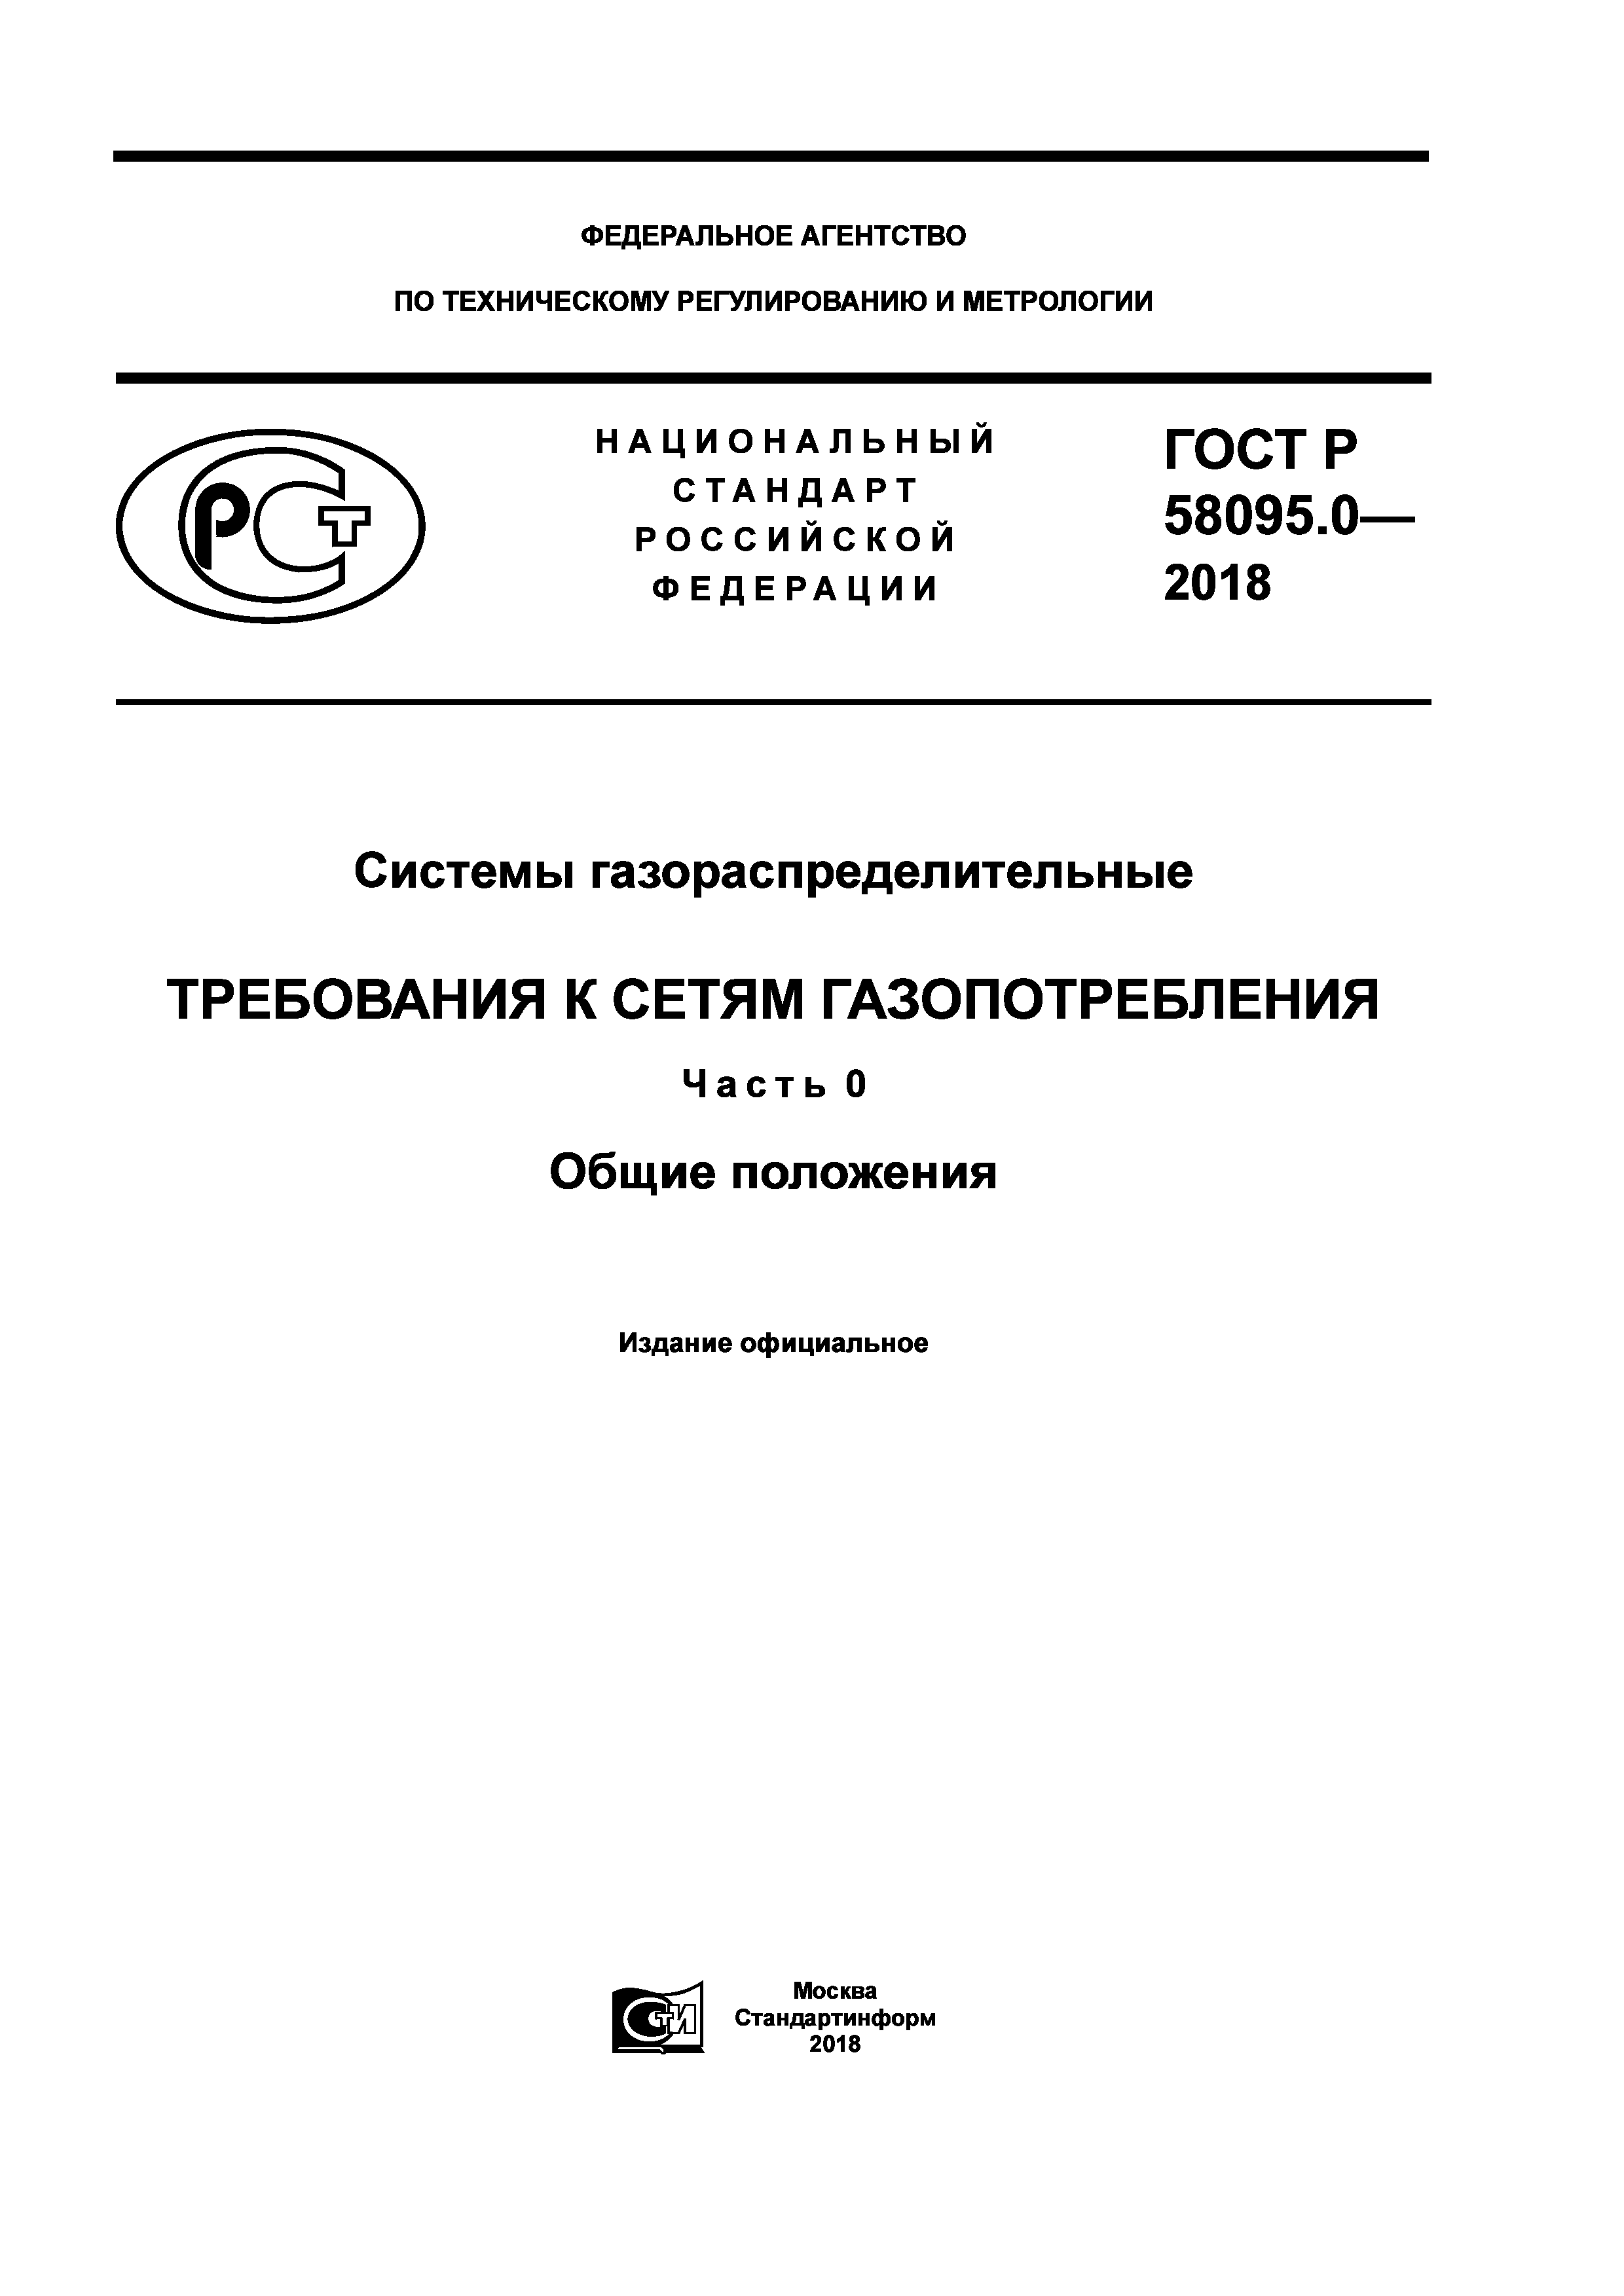 ГОСТ Р 58095.0-2018